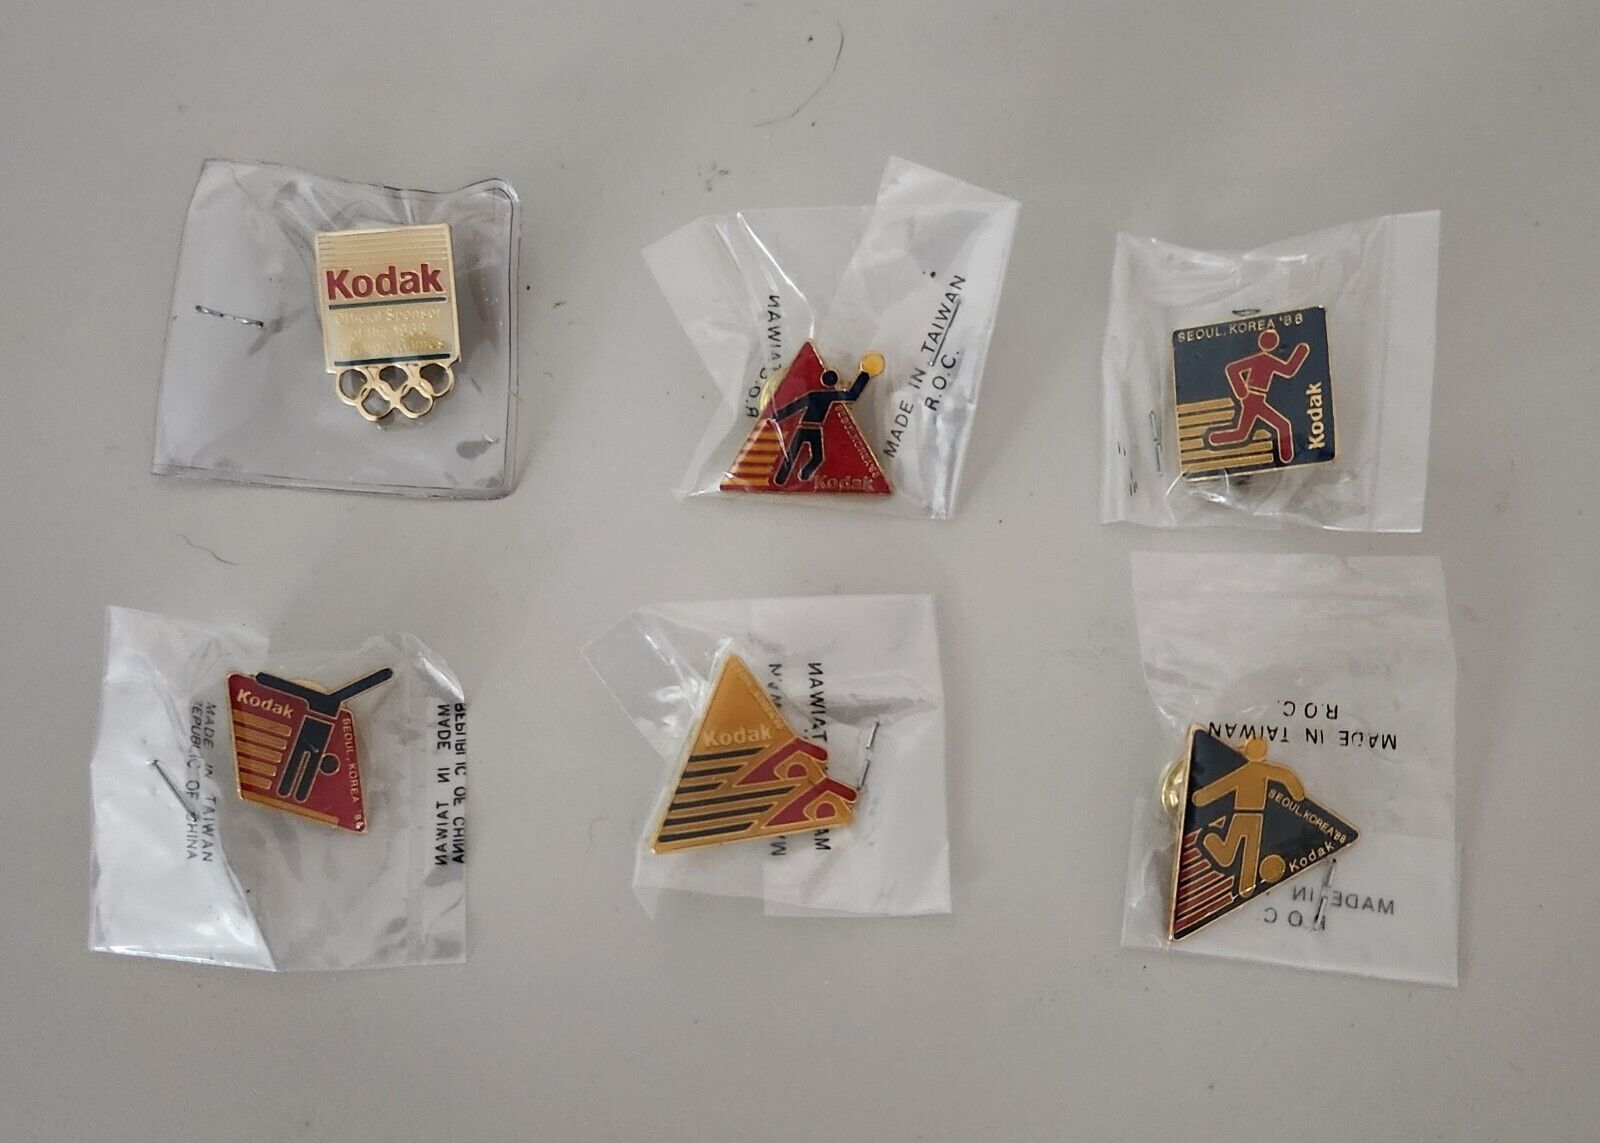 1988 Seoul Summer Olympics pins, Kodak, set of 6, never opened